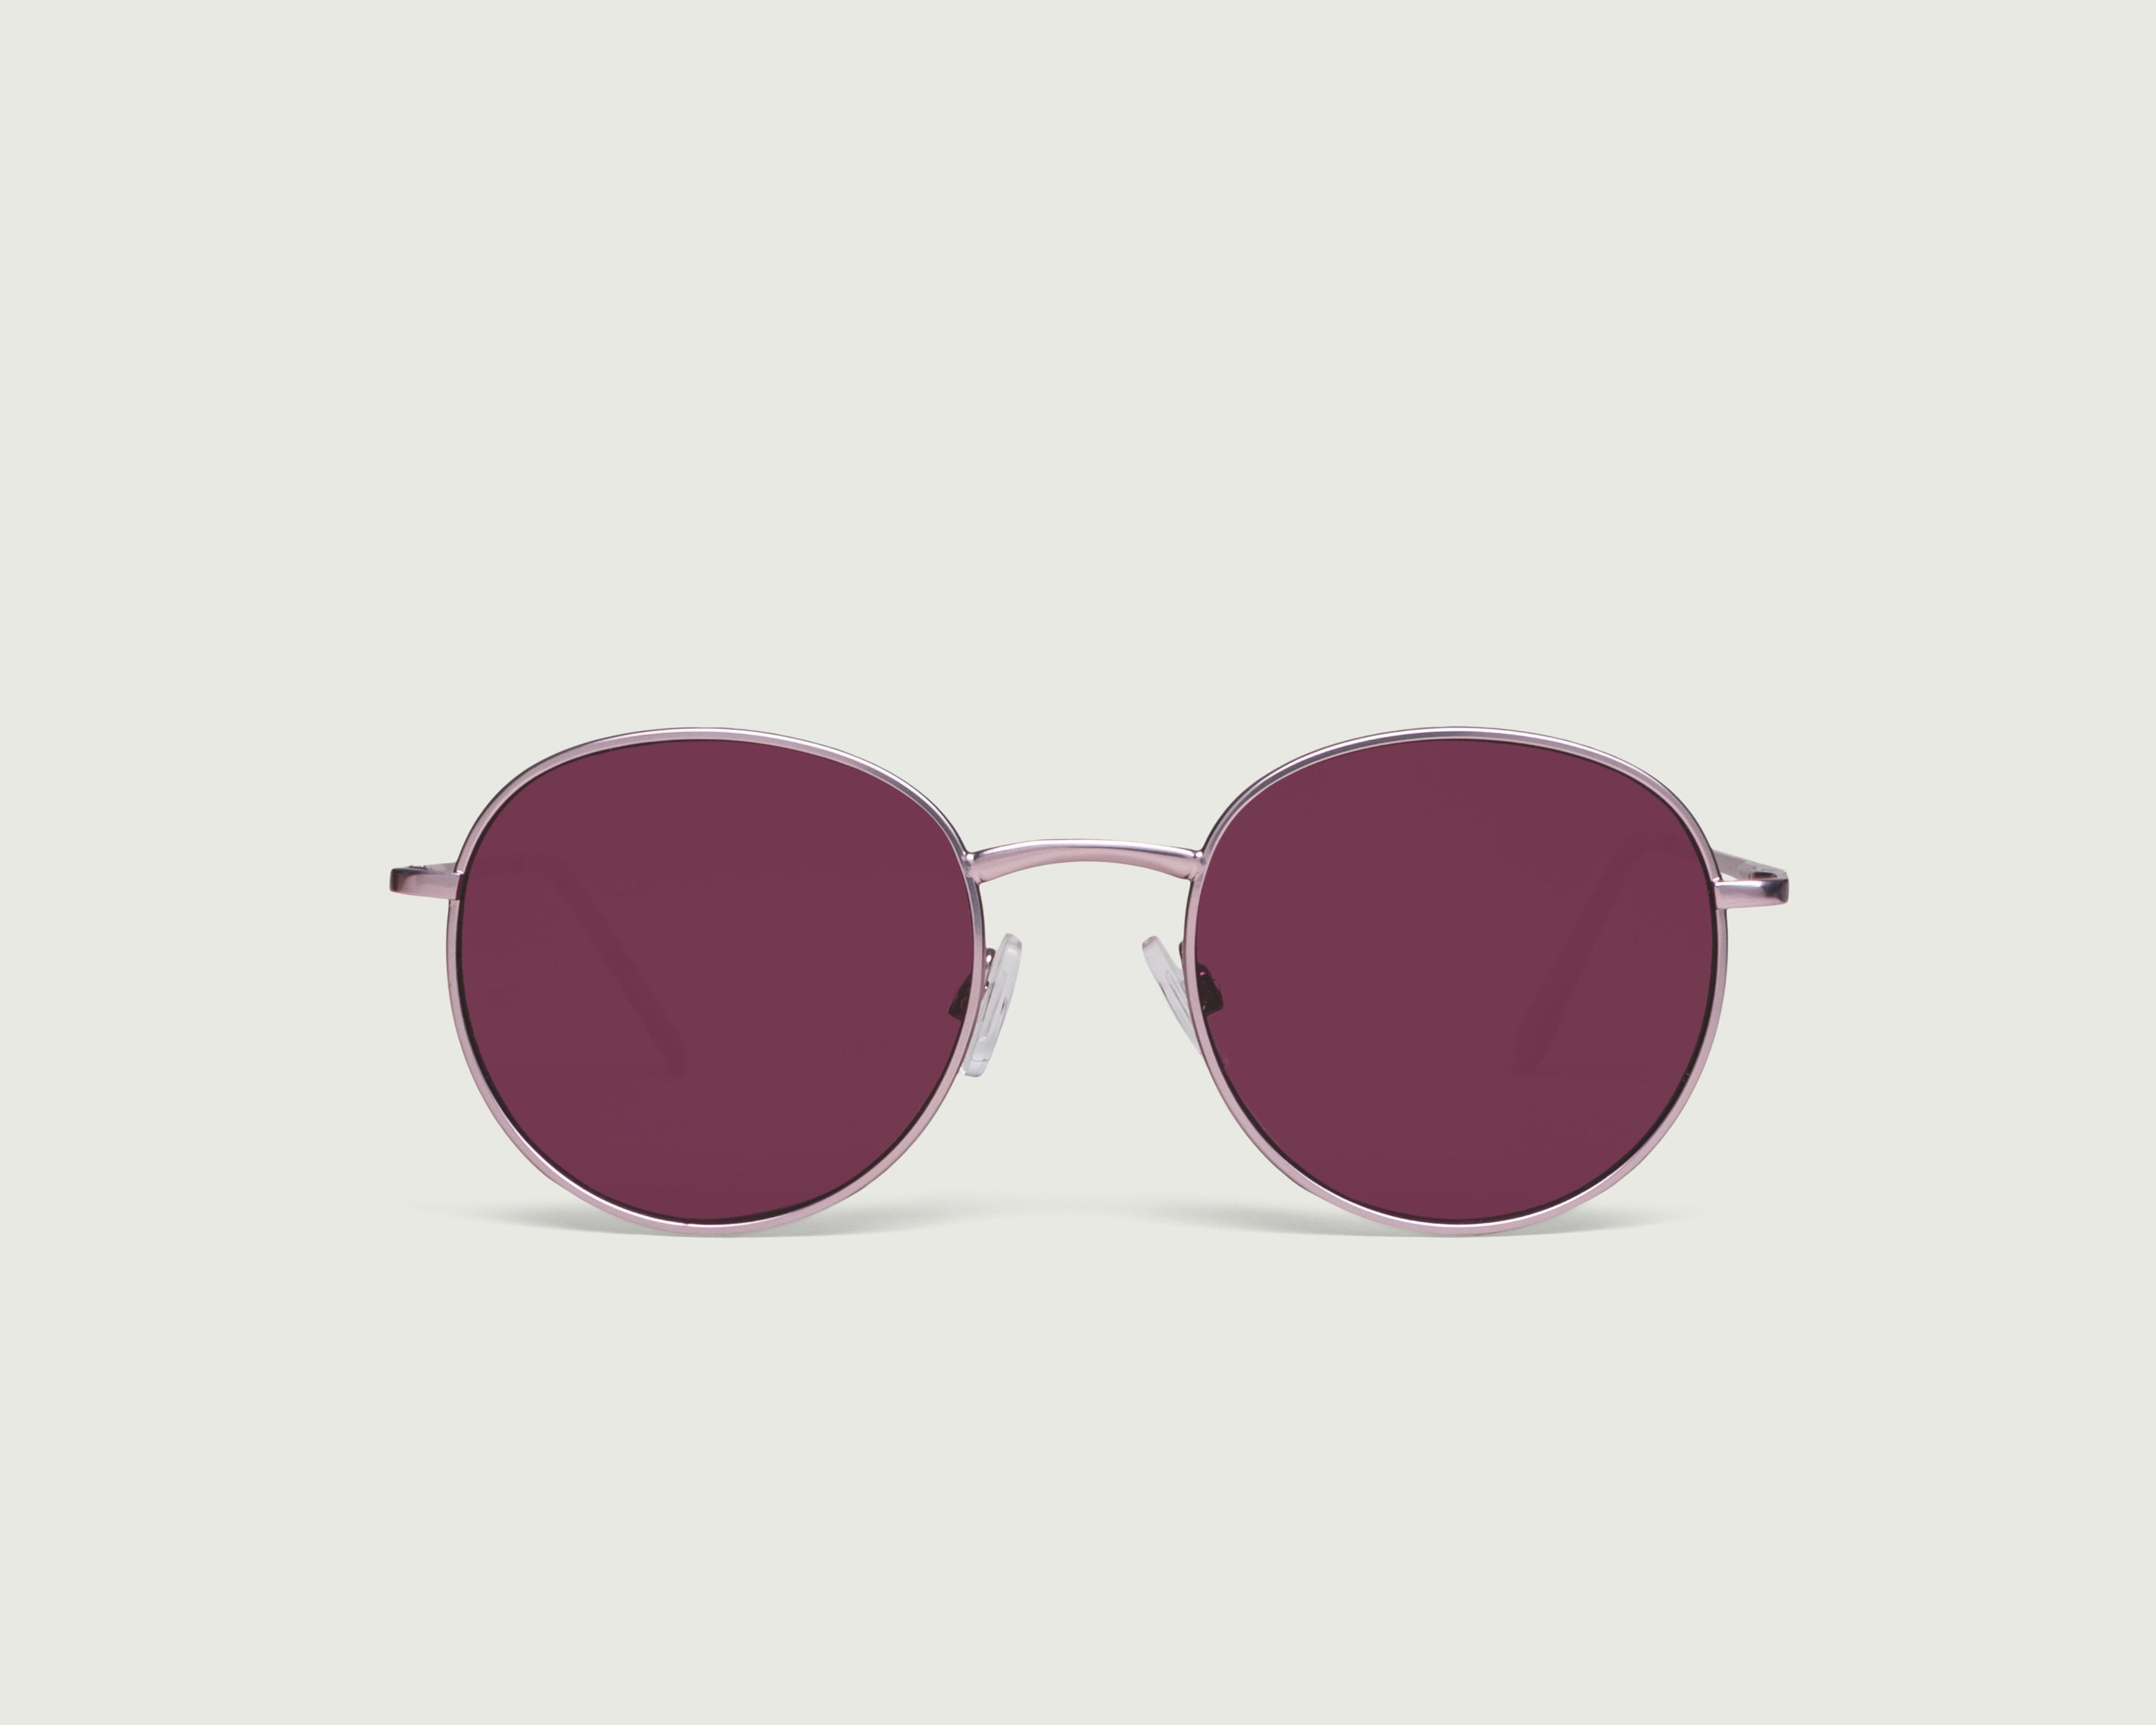 Plum::Jett Sunglasses round pink metal front